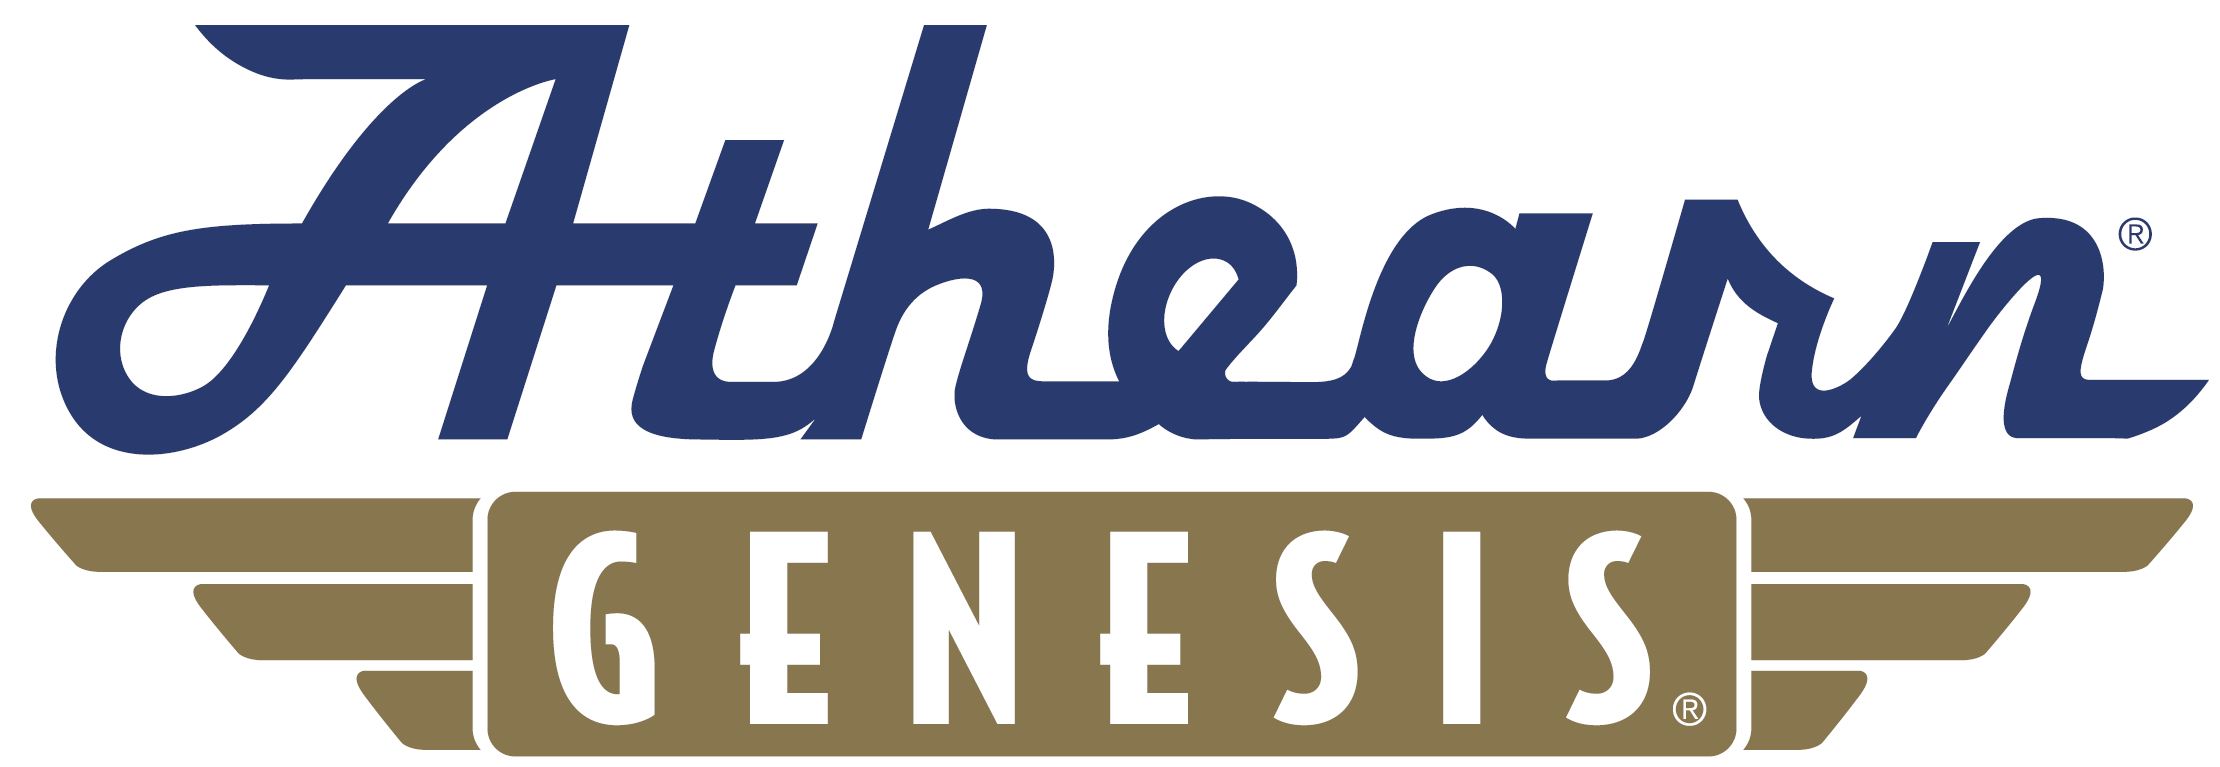 New Athearn Genesis Logo